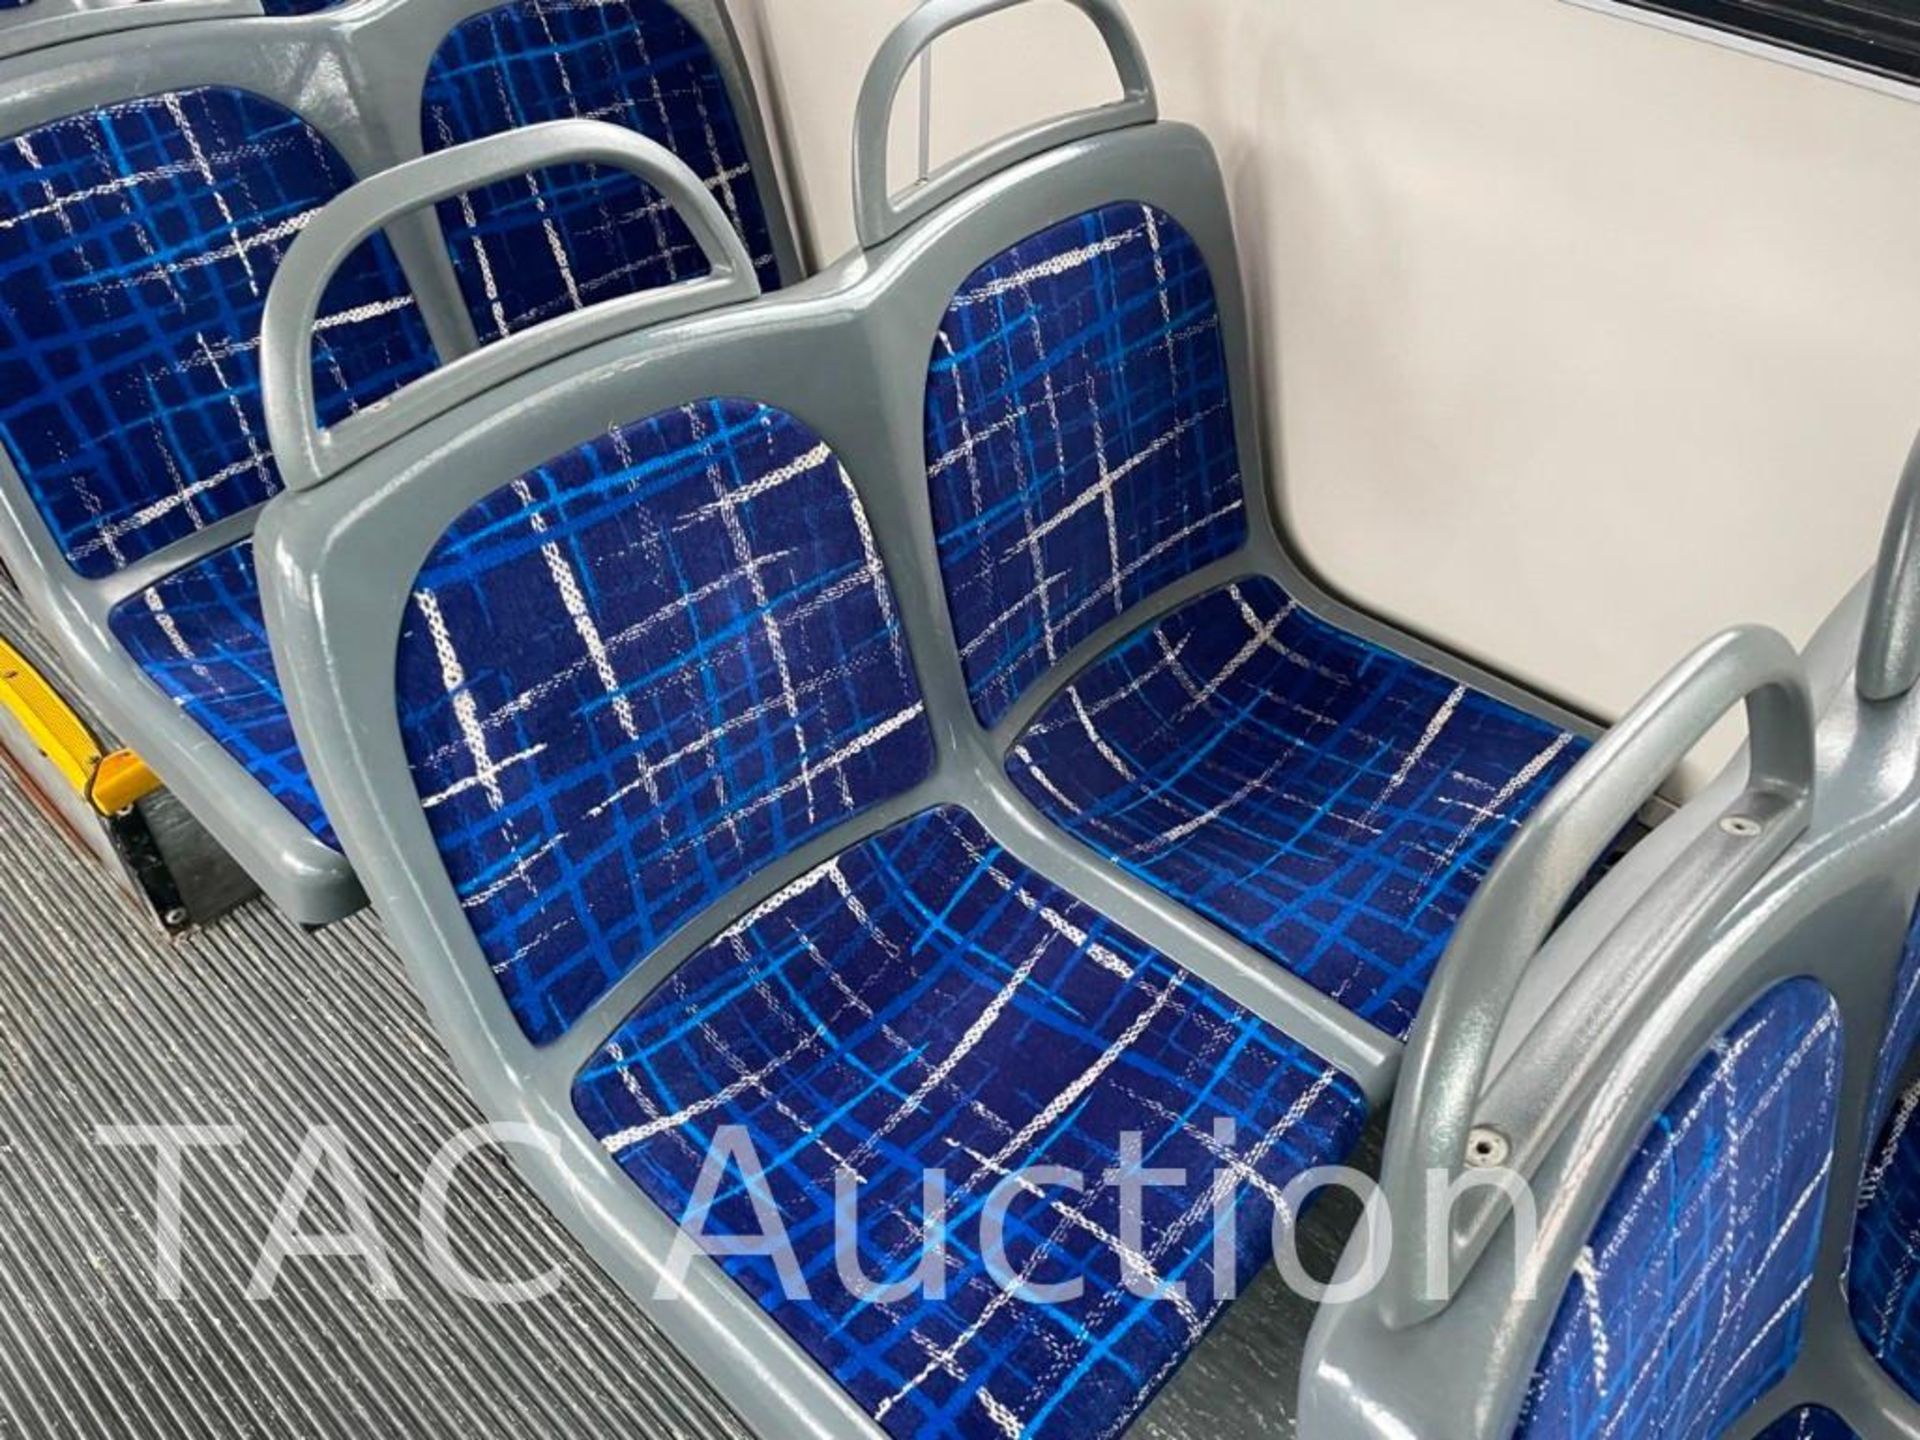 2005 Gillig Low Floor (40) Passenger Coach Transit Bus - Image 49 of 91